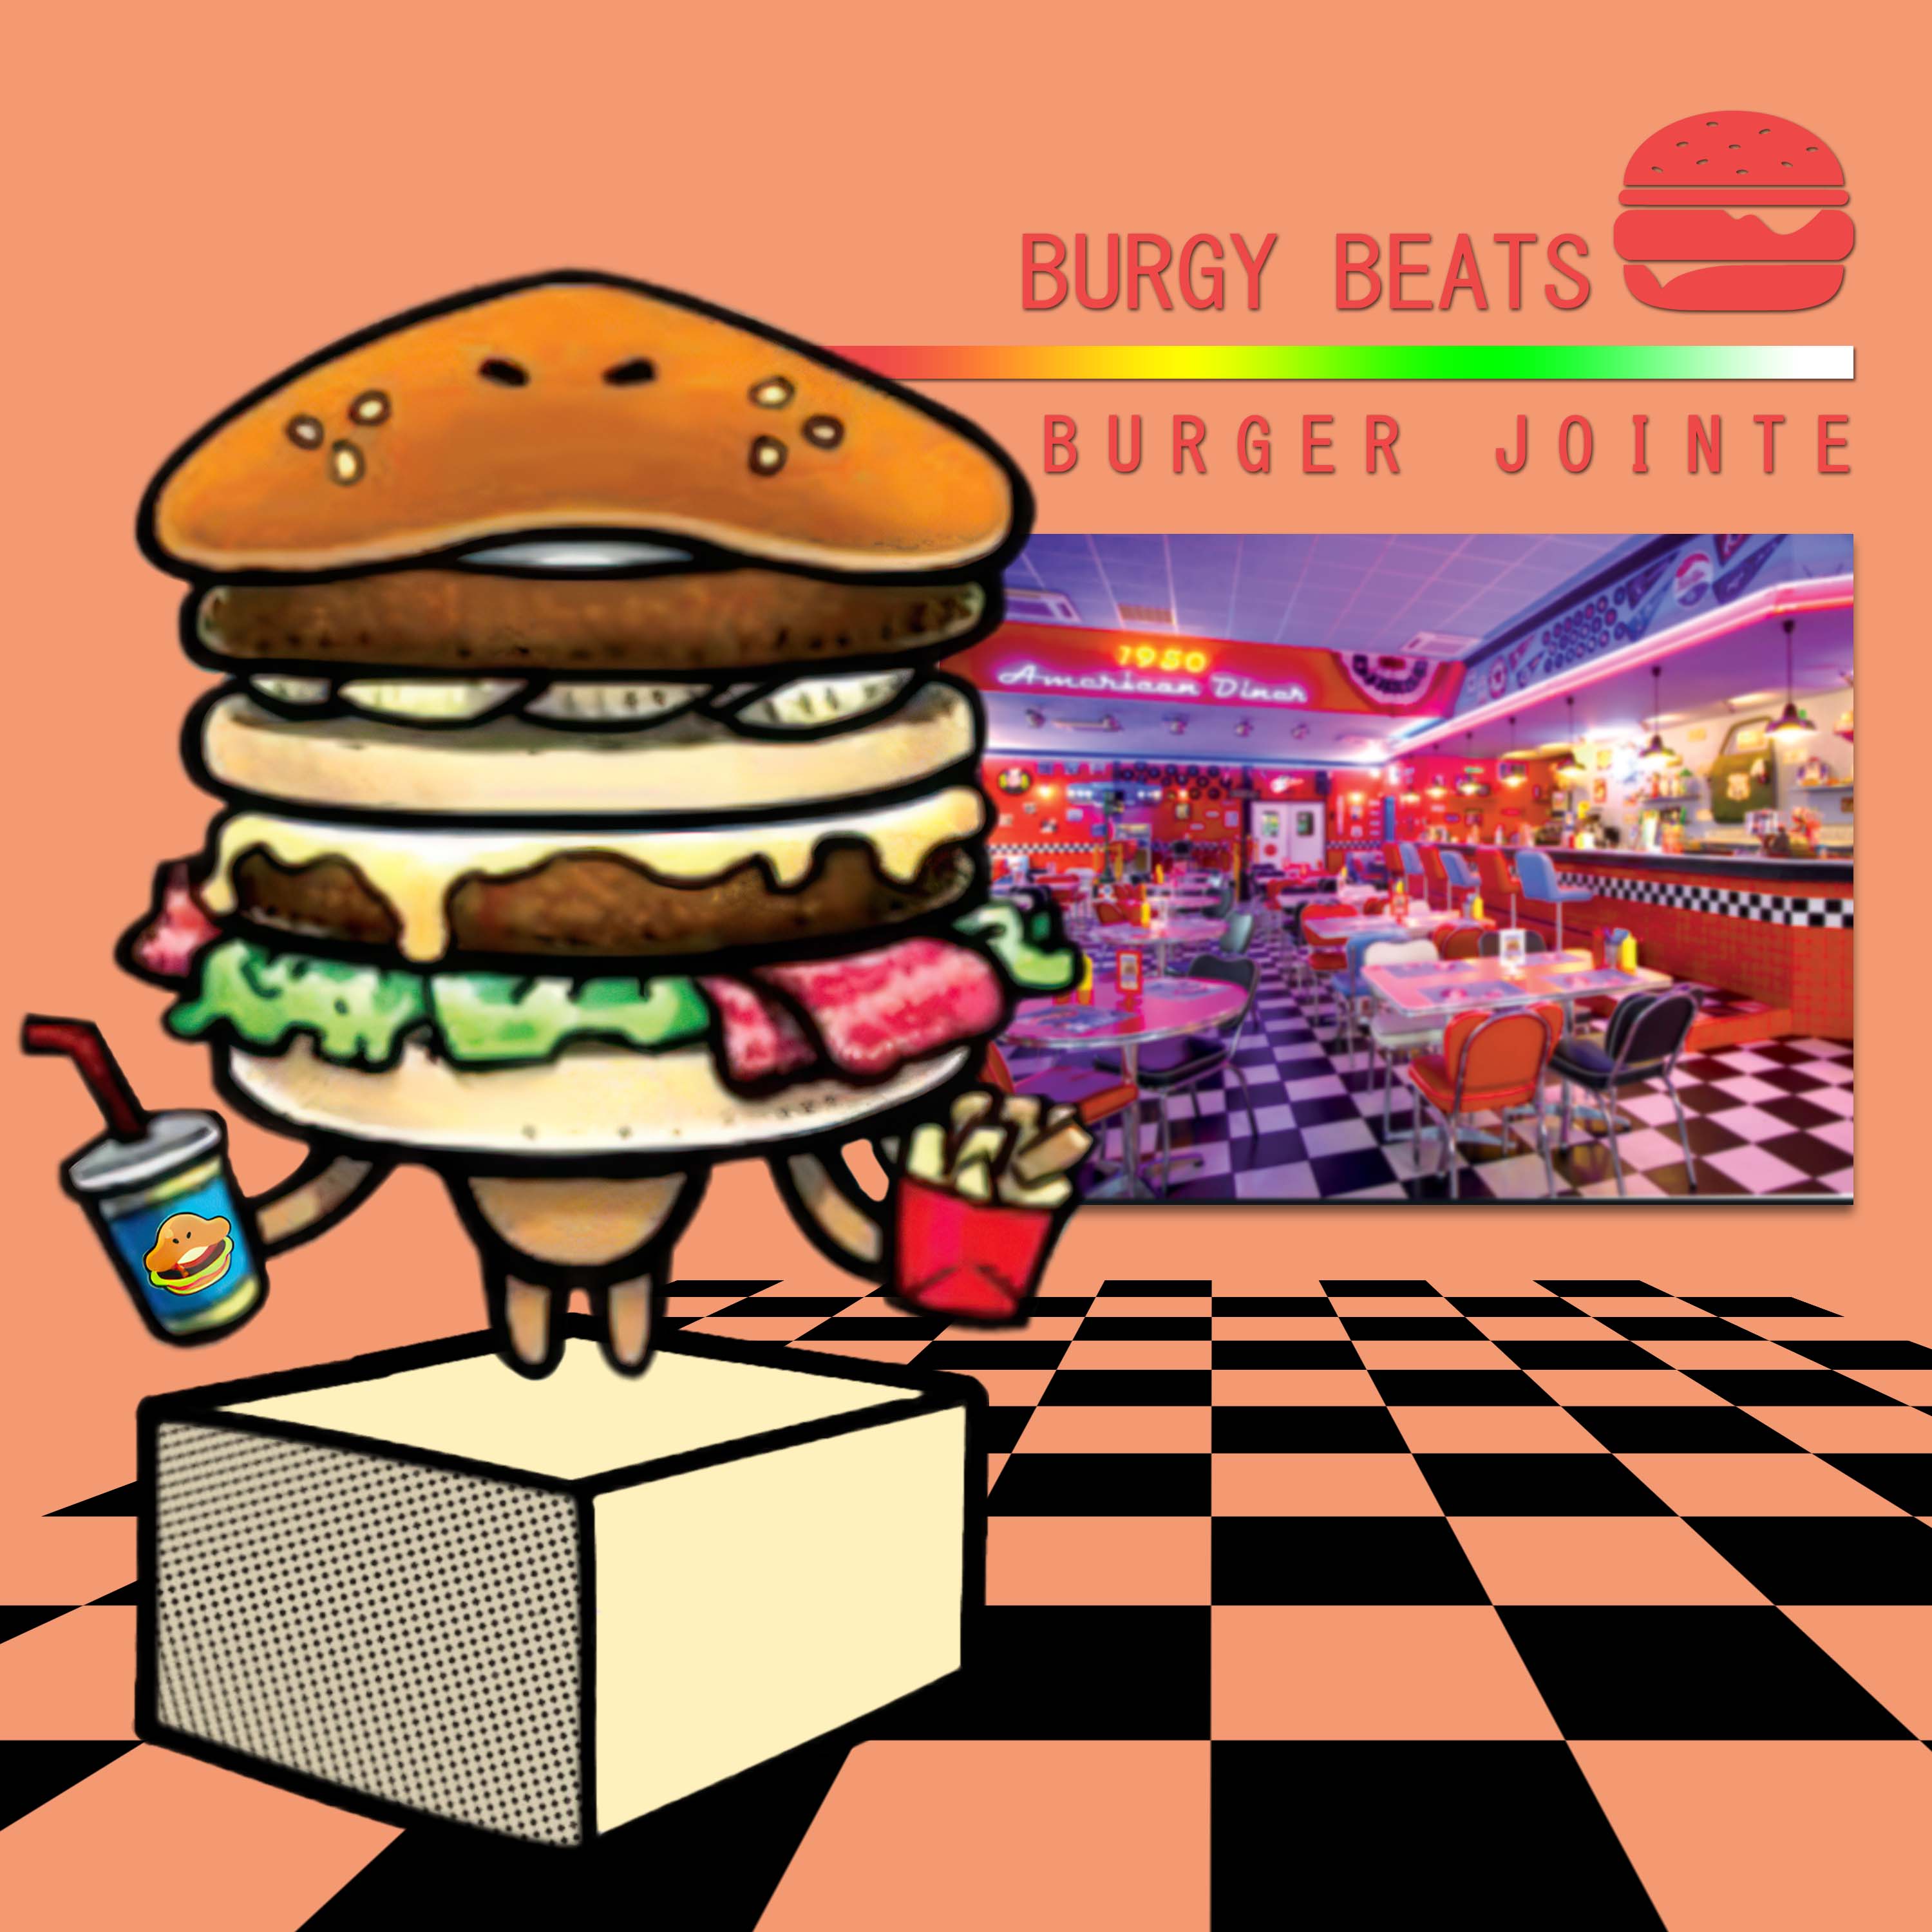 Burgy Beats - Burger Jointe